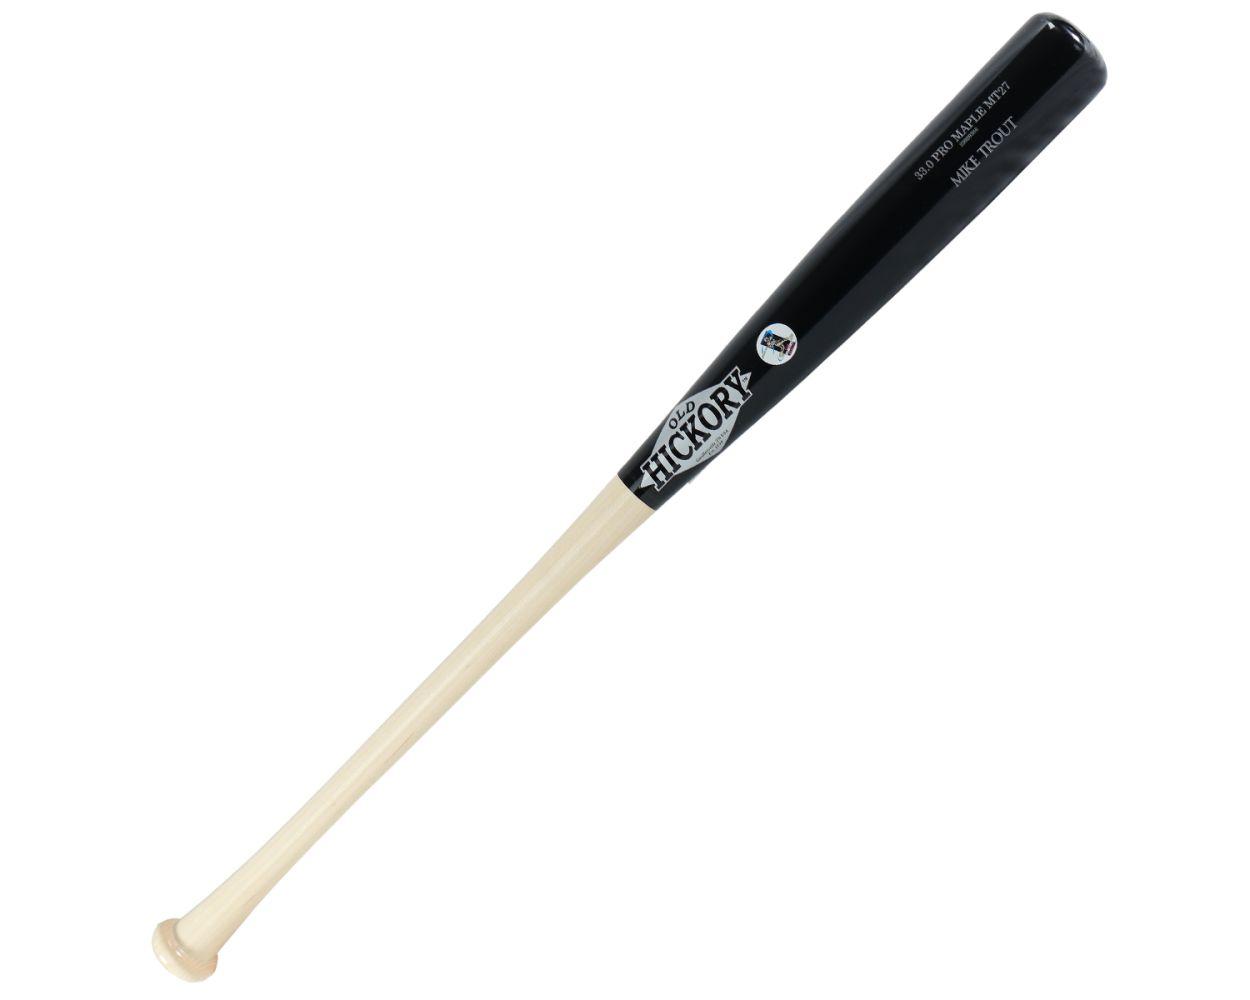 Old Hickory Bat Co. Mike Trout Birch Wood Baseball Bat (MT27B